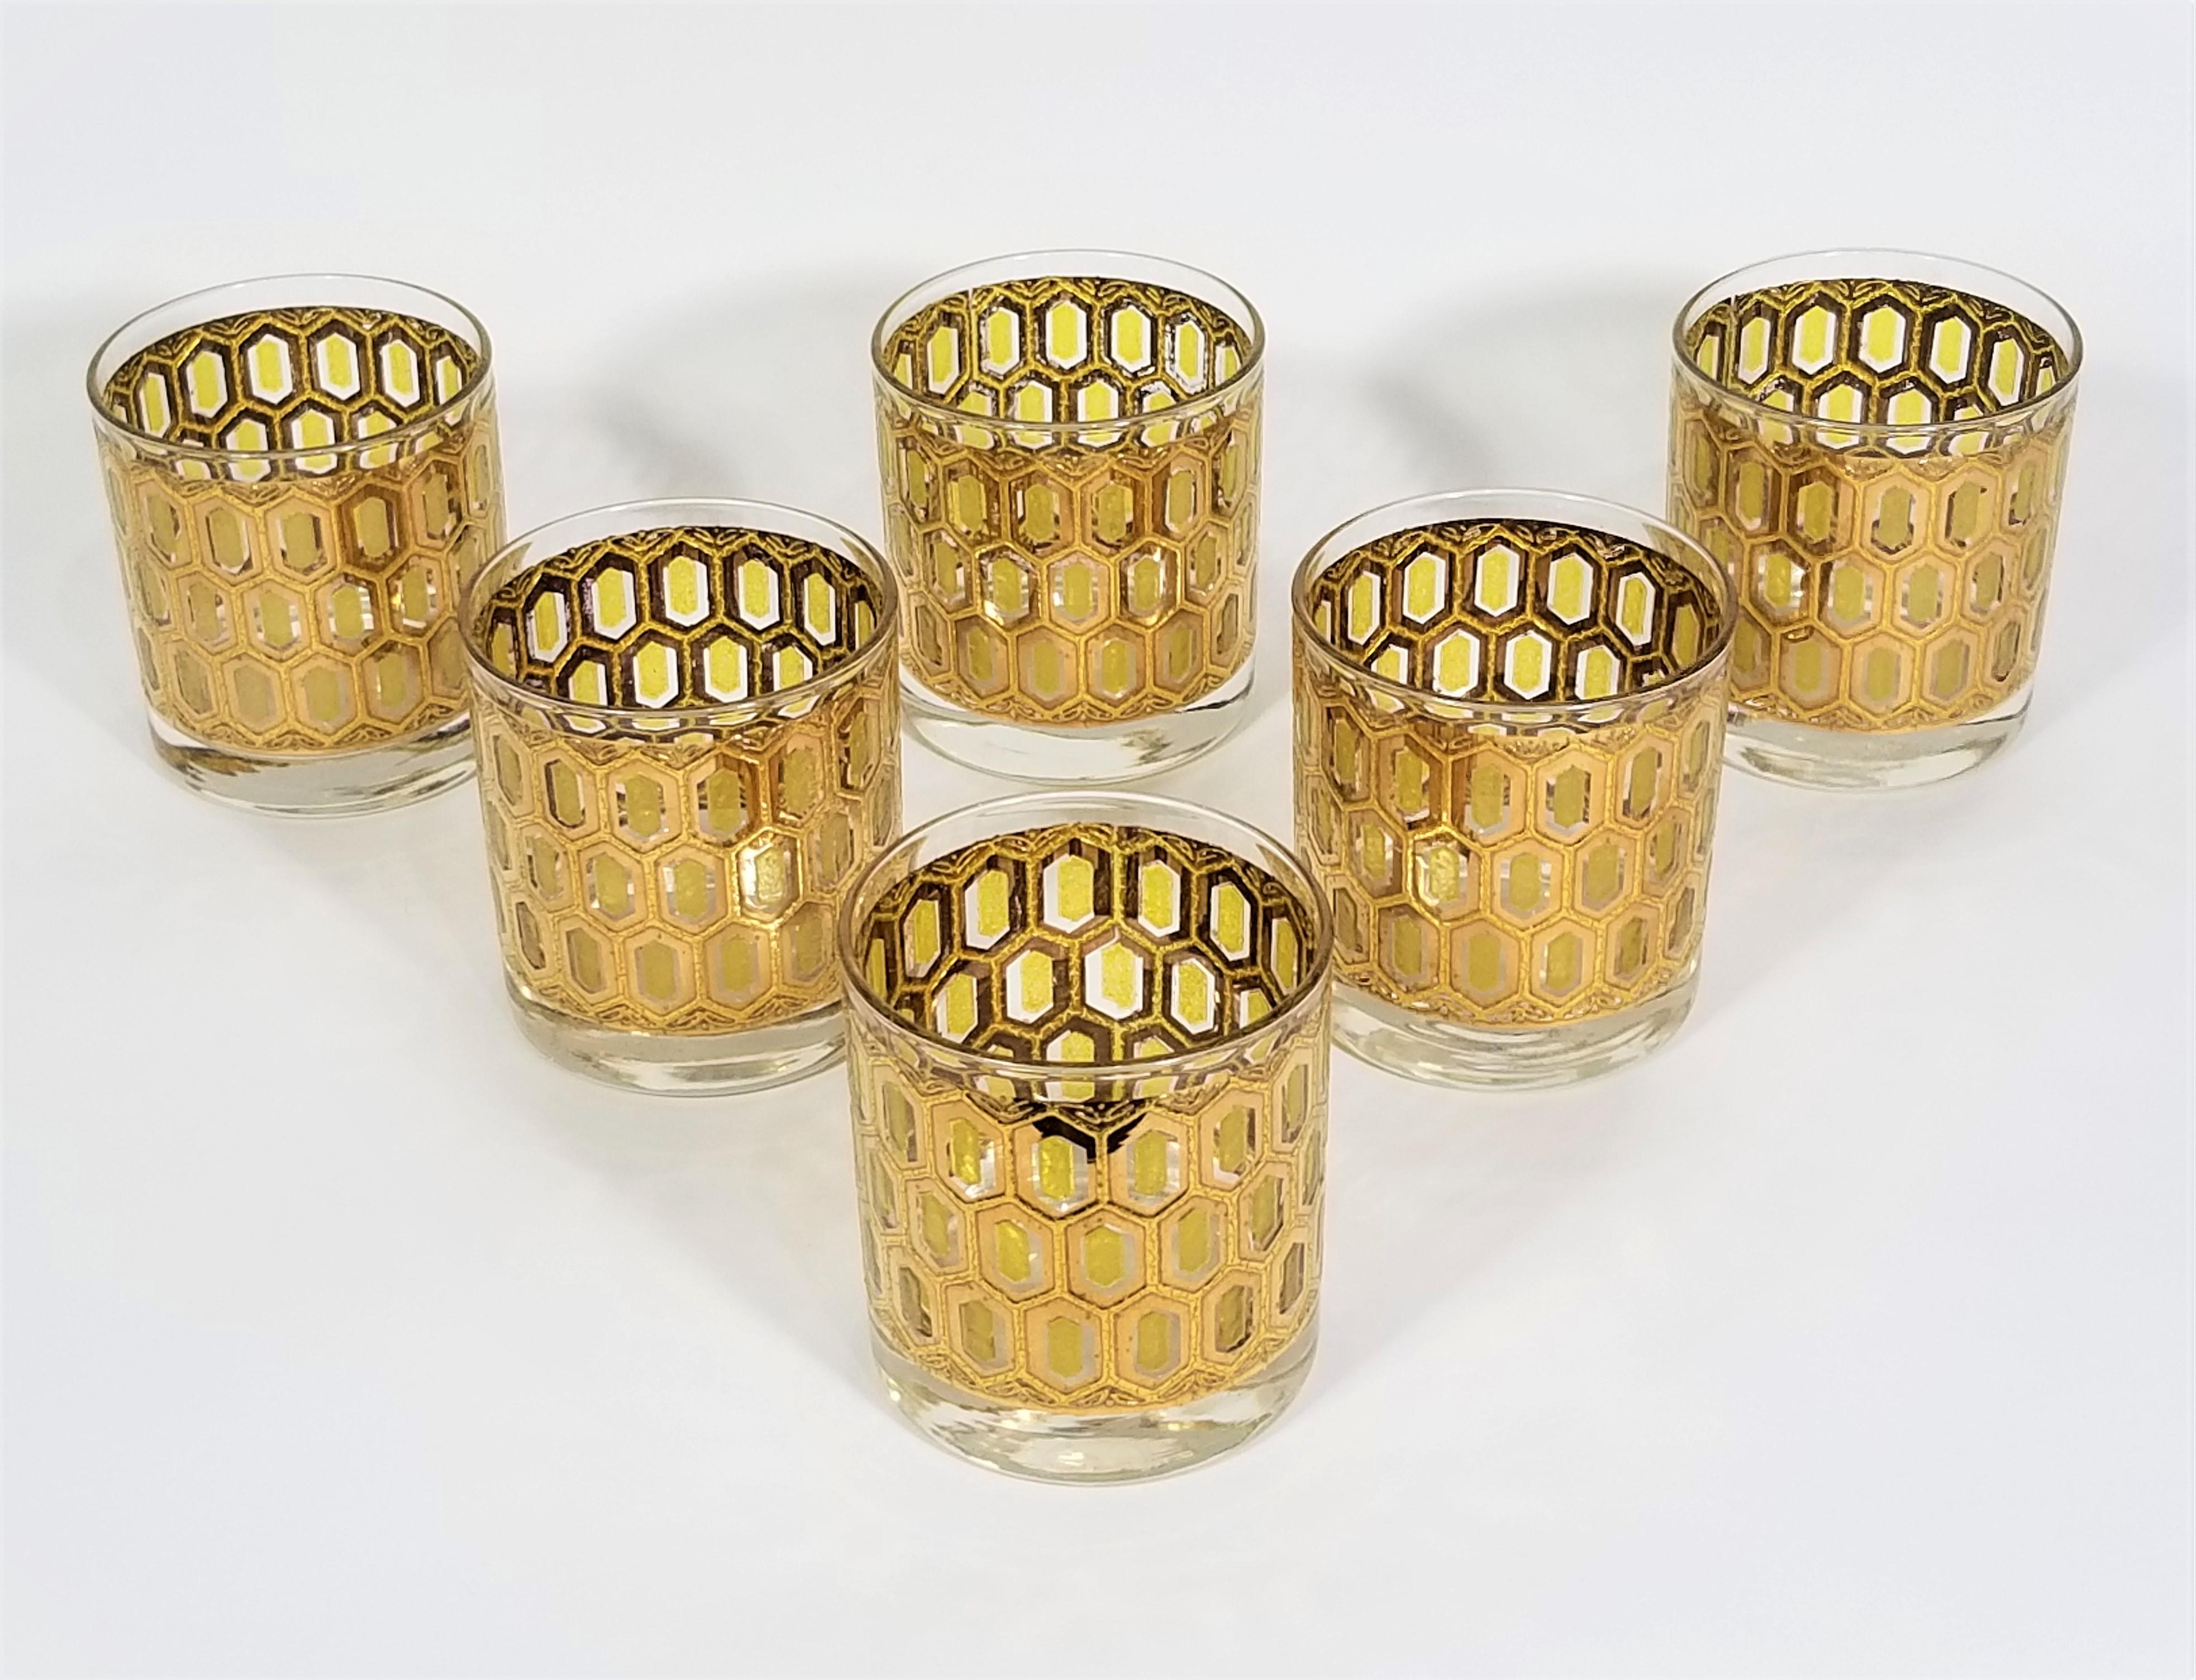 1960s mid century culver 22k gold glassware barware set of 6. Unmarked.